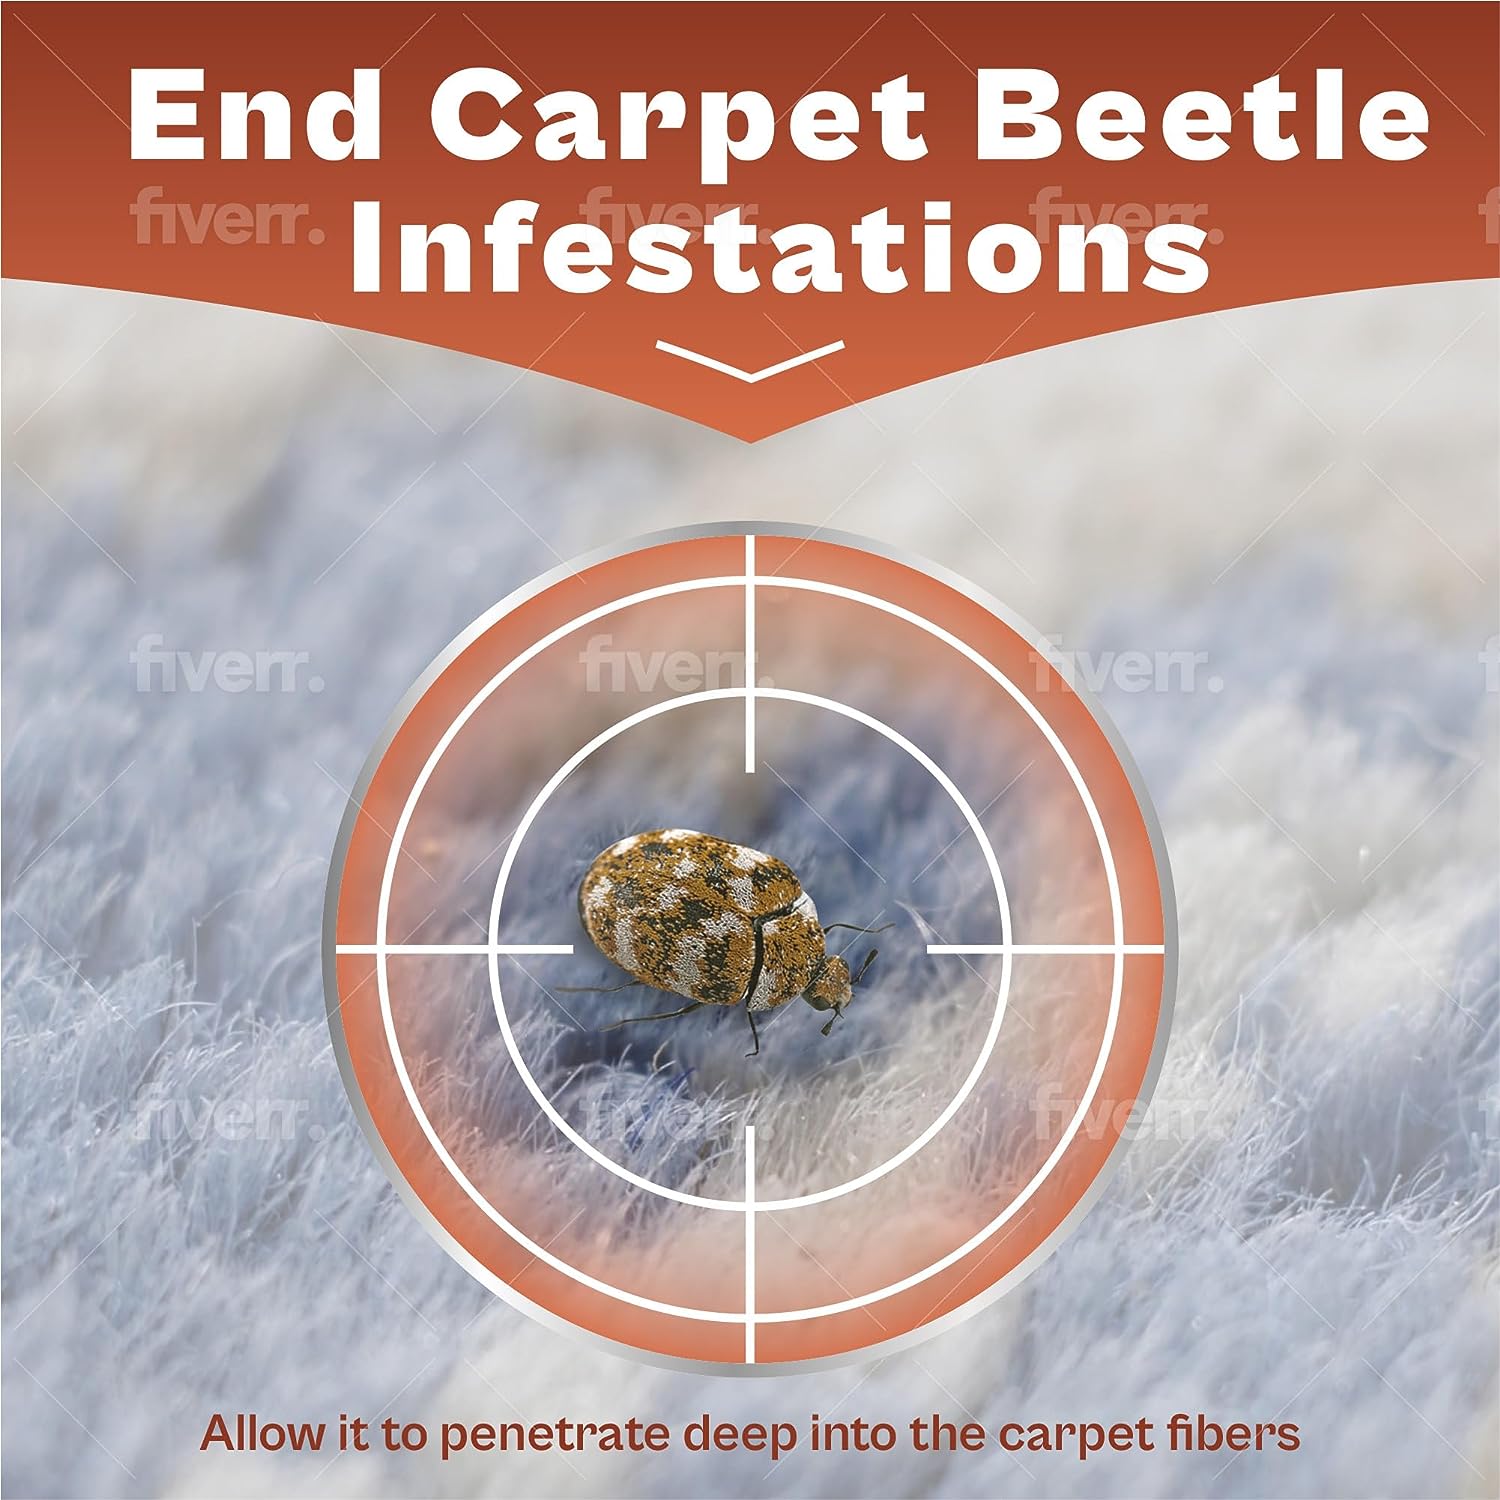 Carpet Beetle Killer Powder (300g)